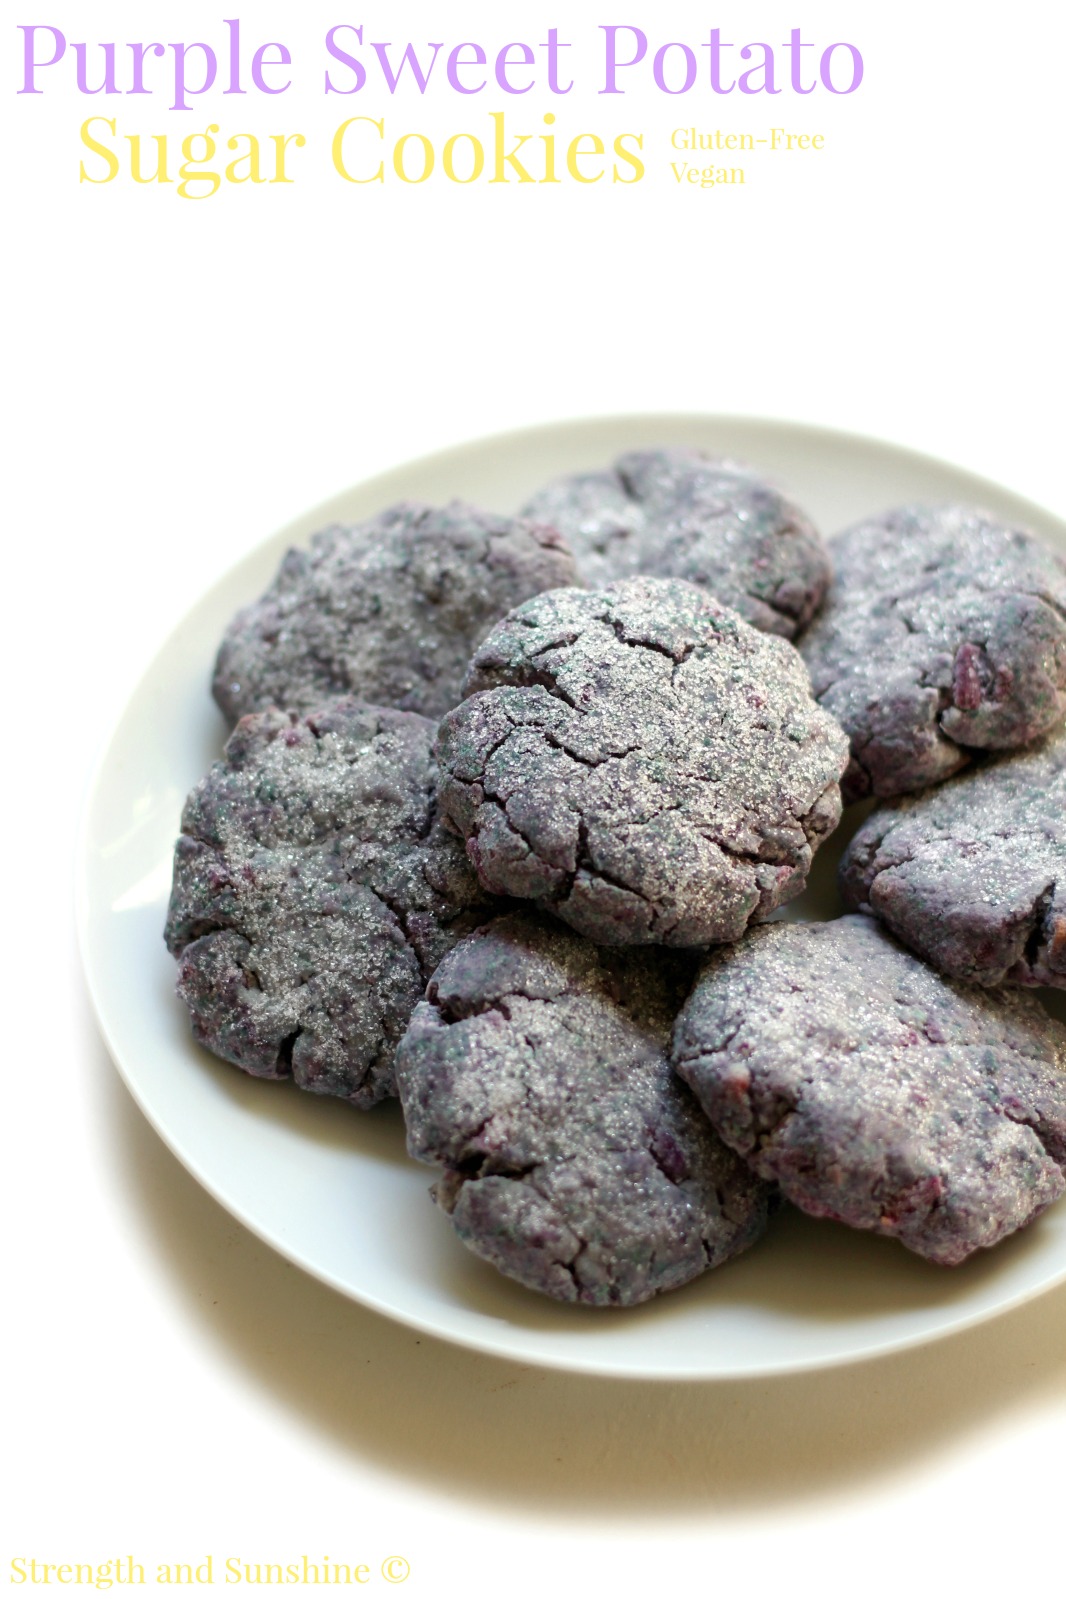 Purple-Sweet-Potato-Sugar-Cookies-PM1